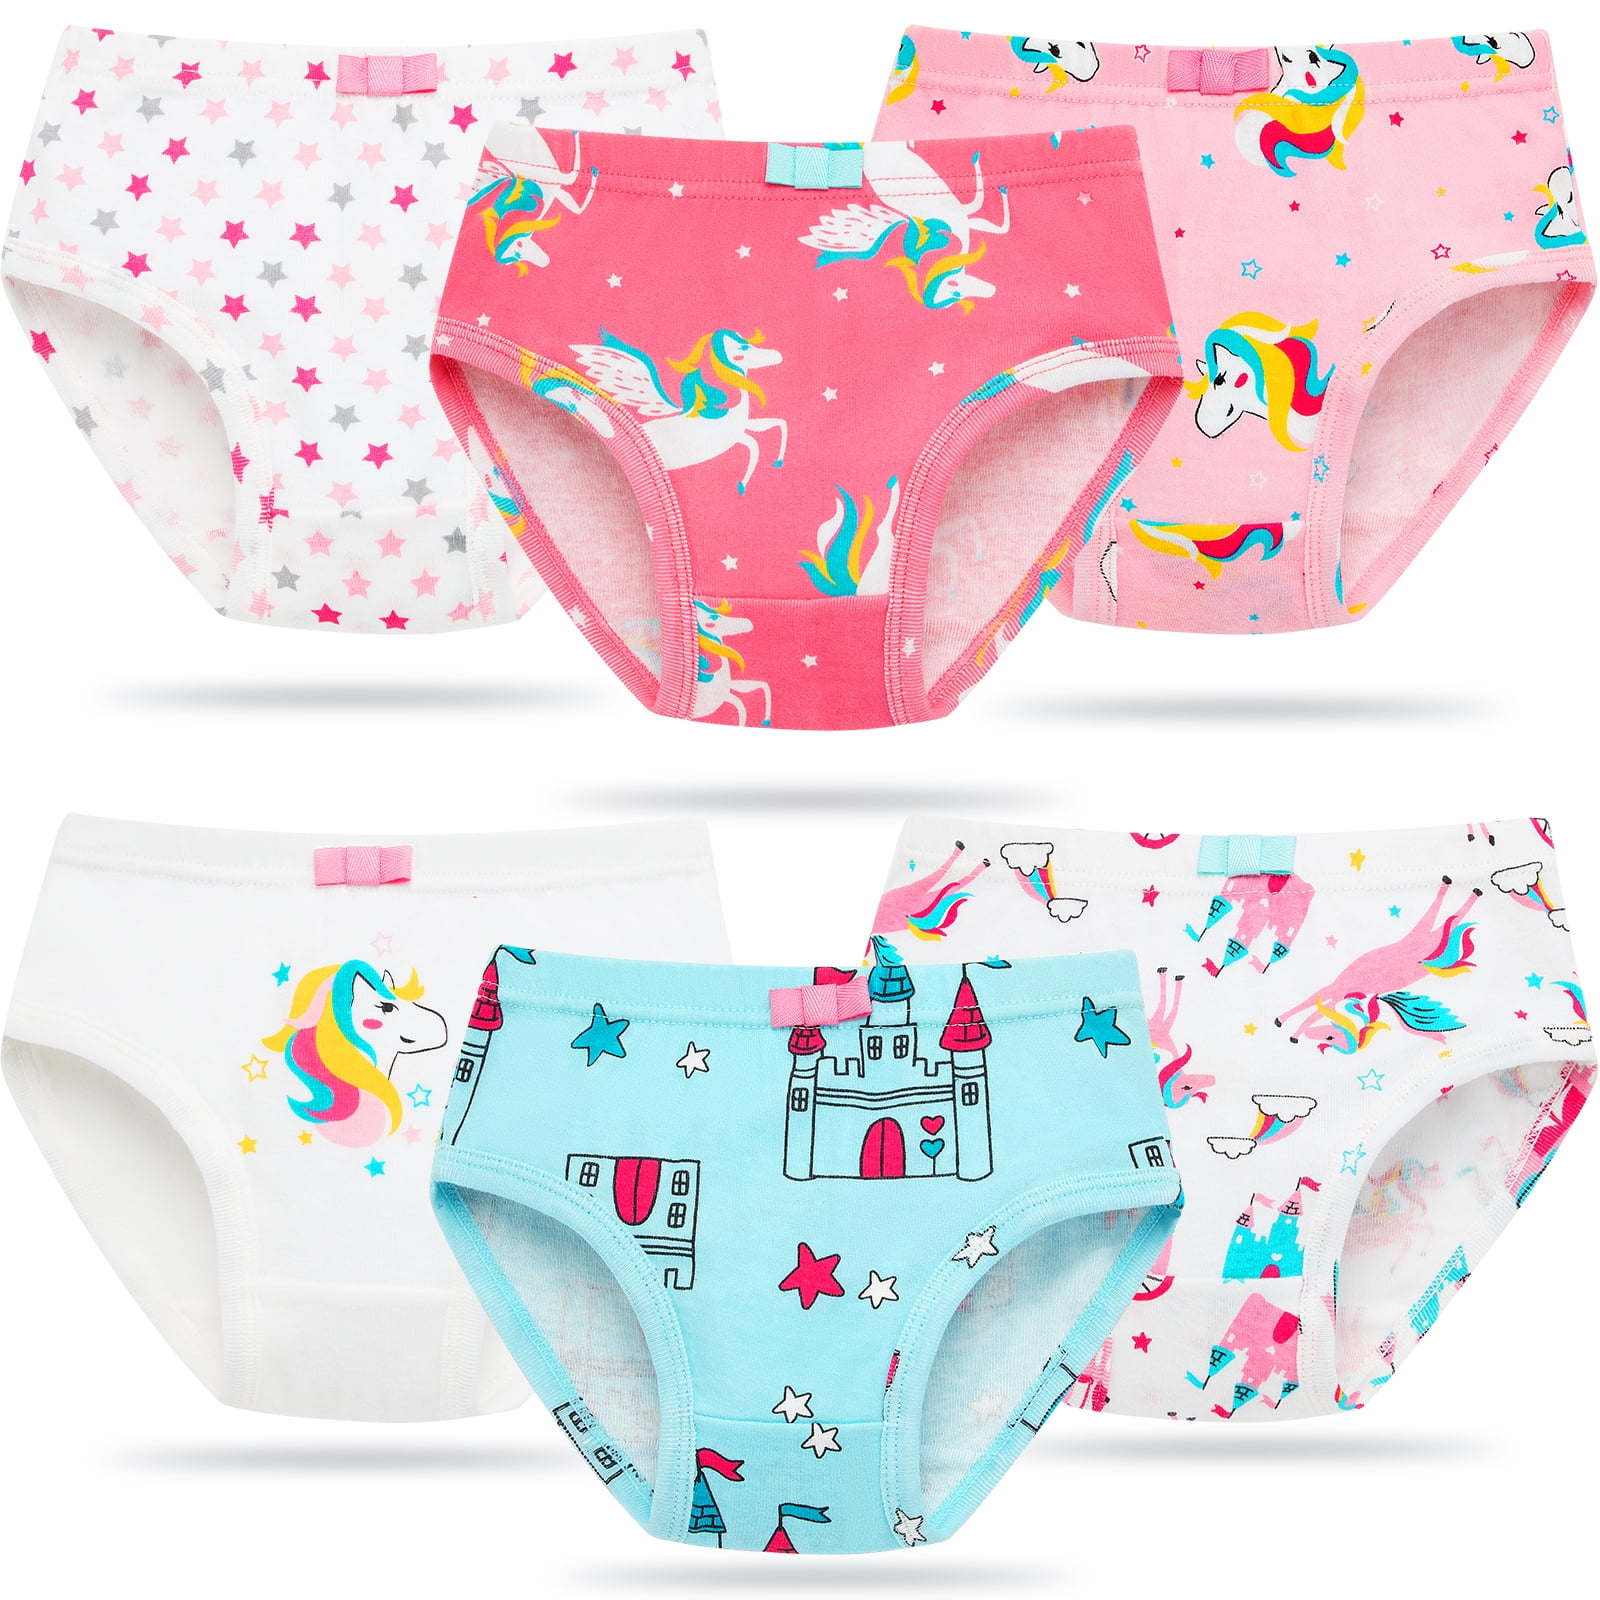 mijaja 6Pcs Girls' Pure Cotton Brief Underwear for Toddler 2-3 Years -  Unicorn,Castle,Stars 